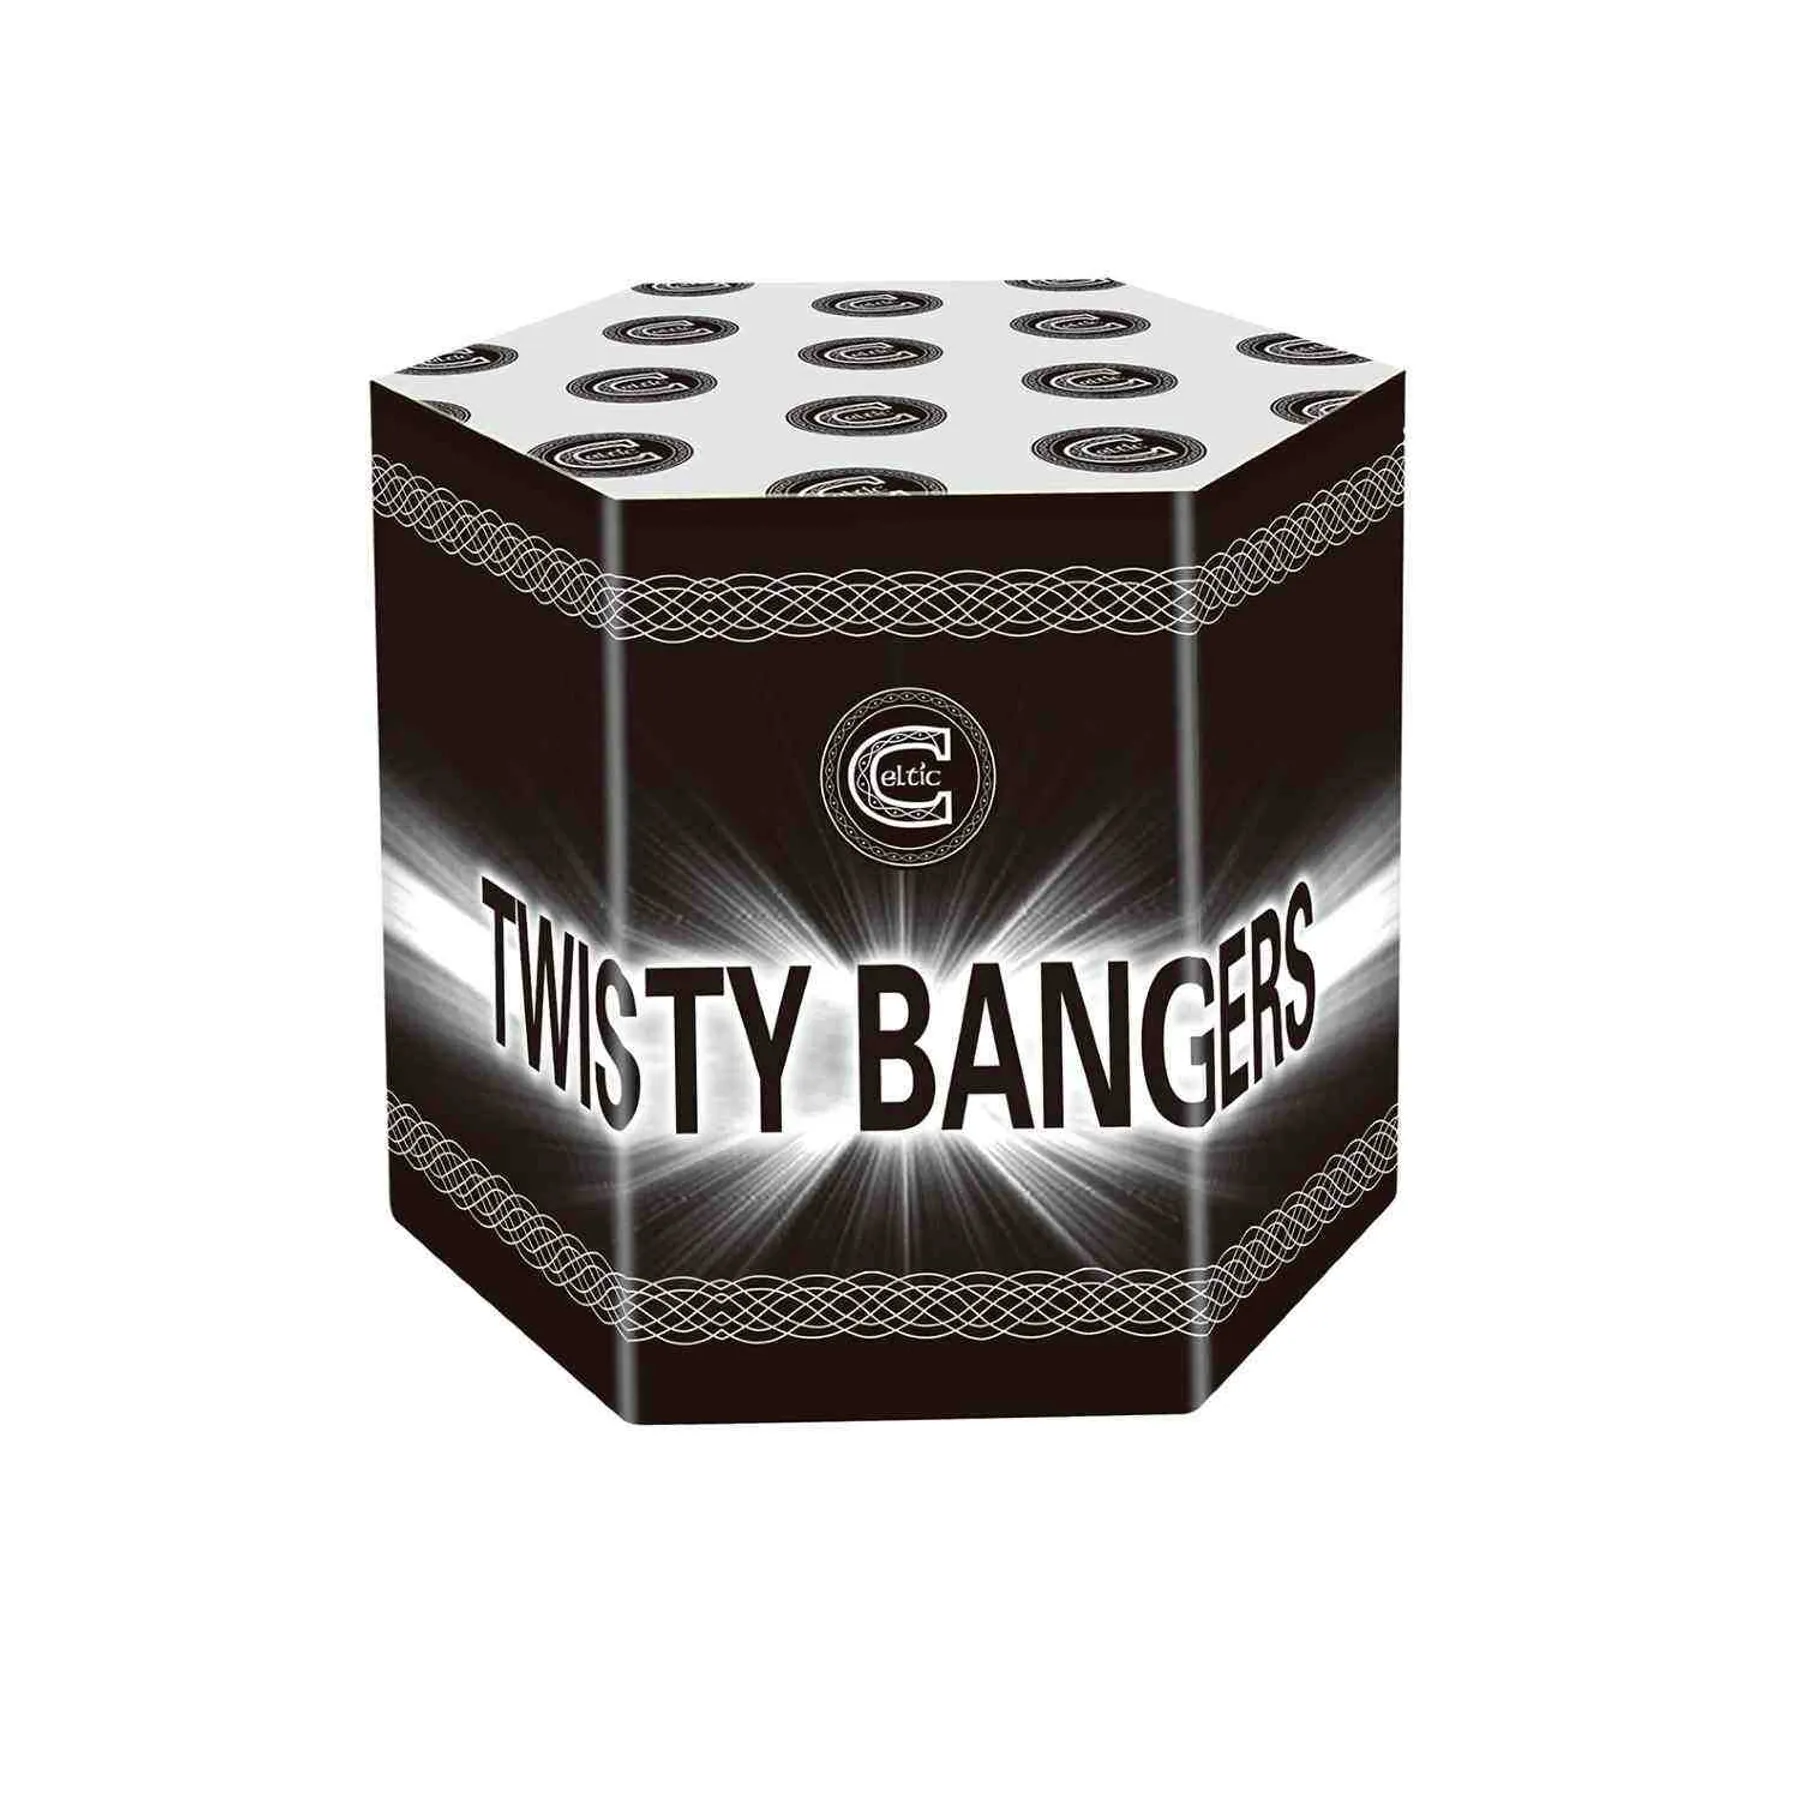 Twisty Bangers Best Seller Dump Cake Celtic Fireworks